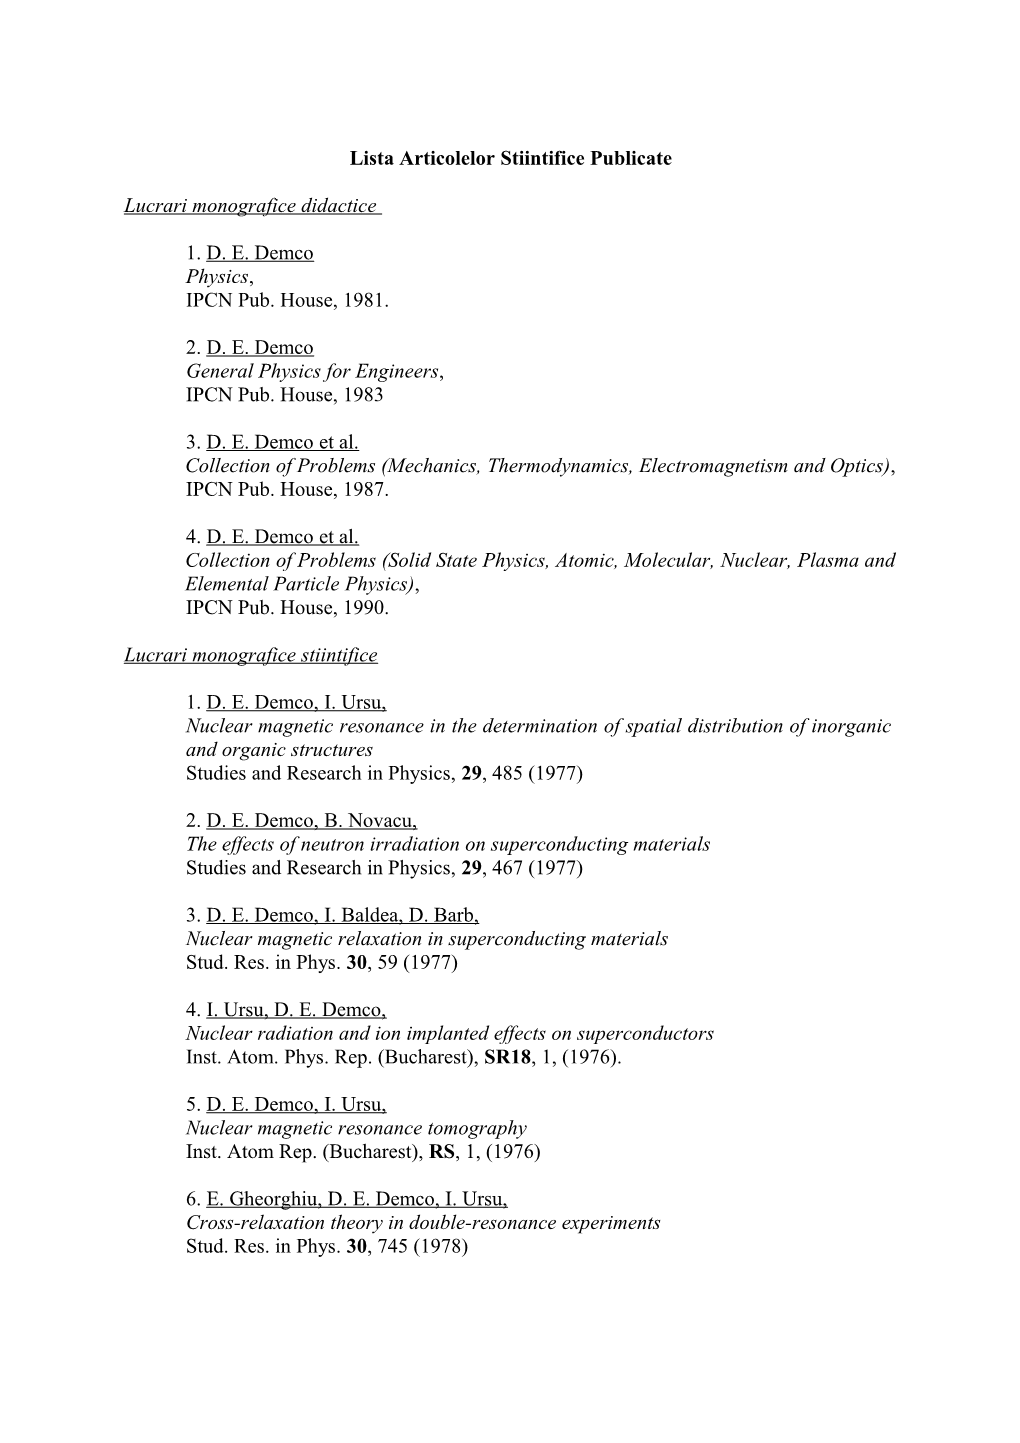 Paper-List of Prof. Demco